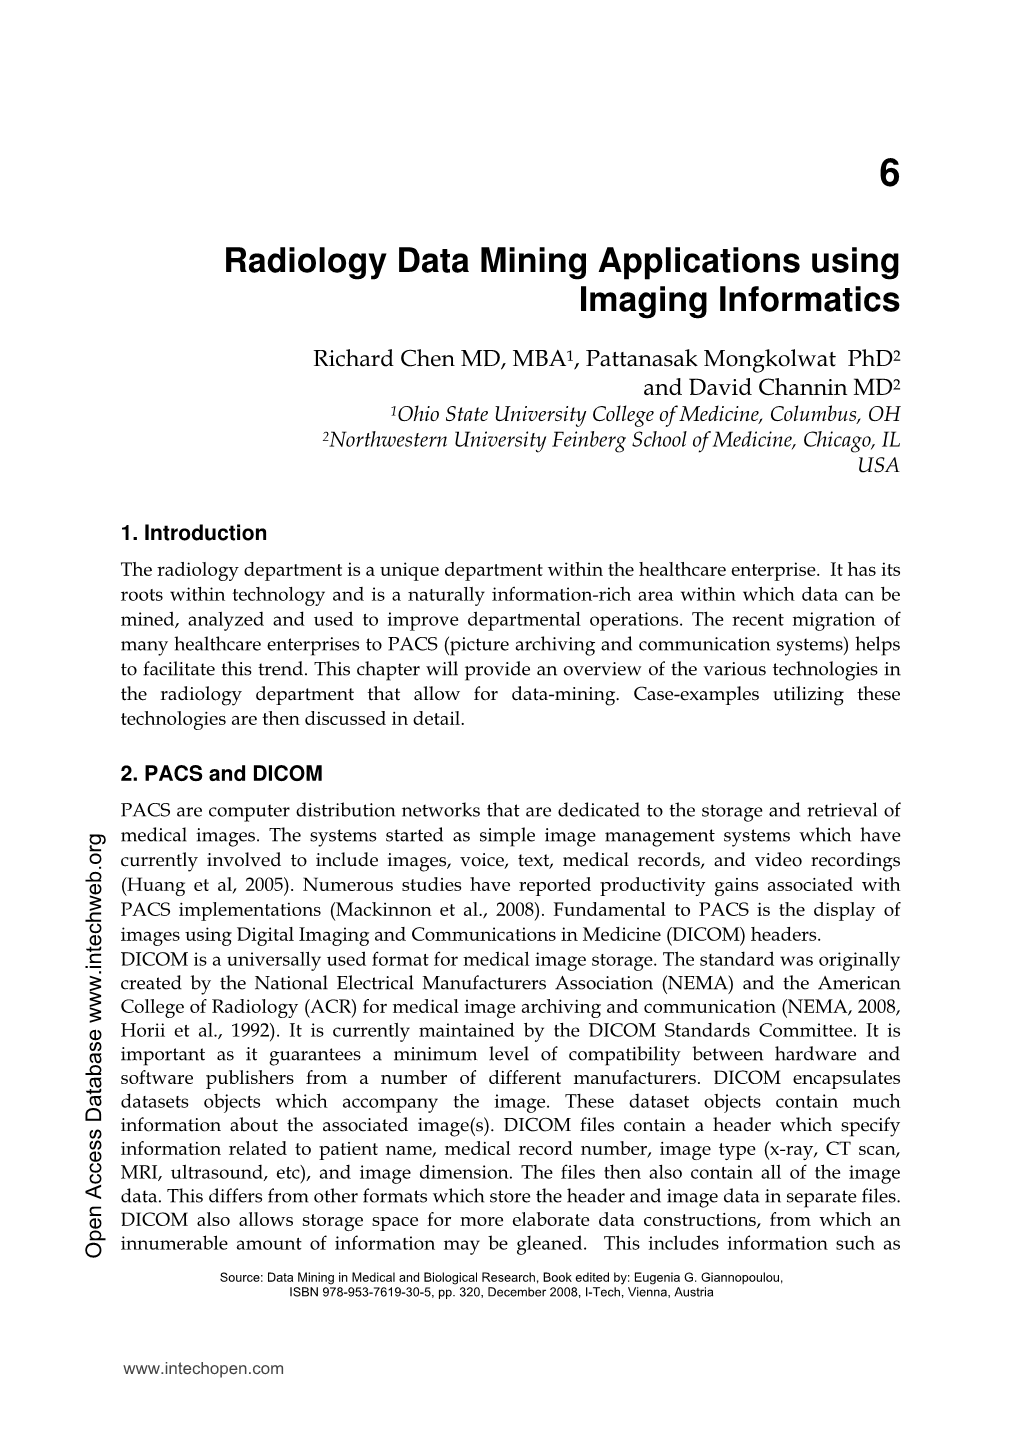 Radiology Data Mining Applications Using Imaging Informatics